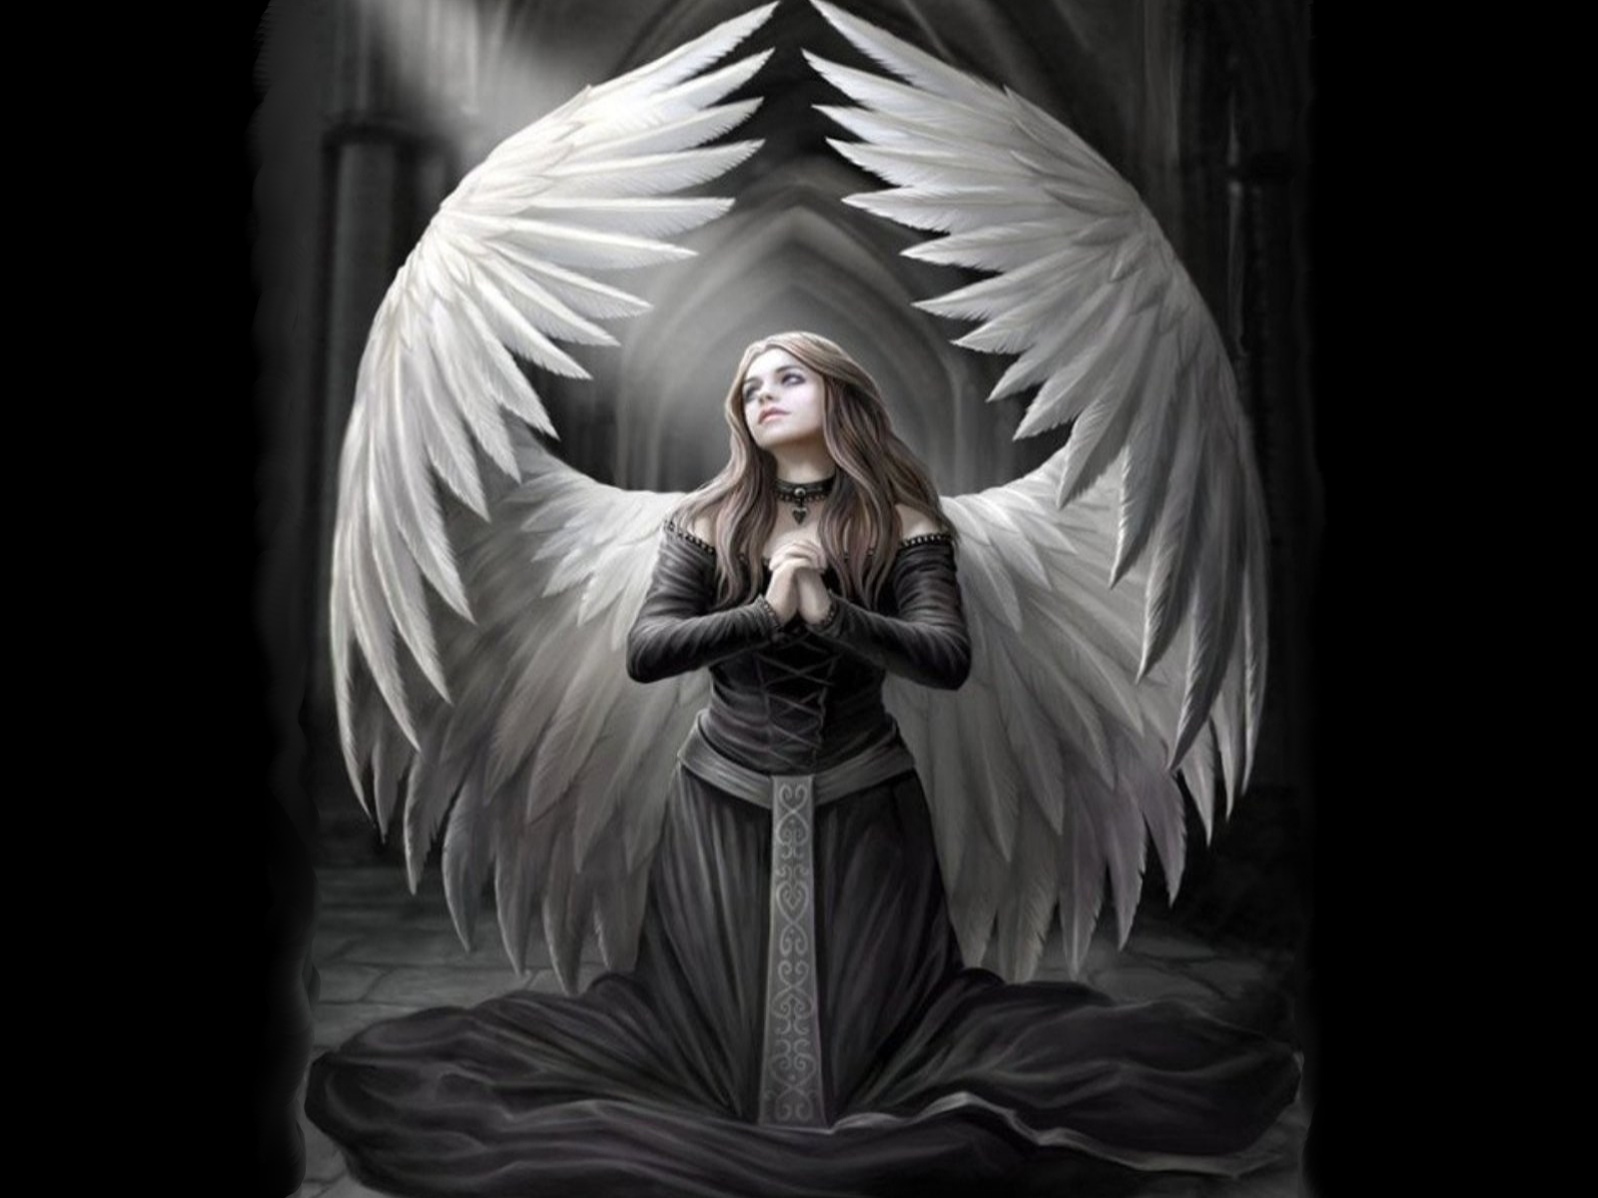 engel wallpaper,angel,mythology,fictional character,supernatural creature,art